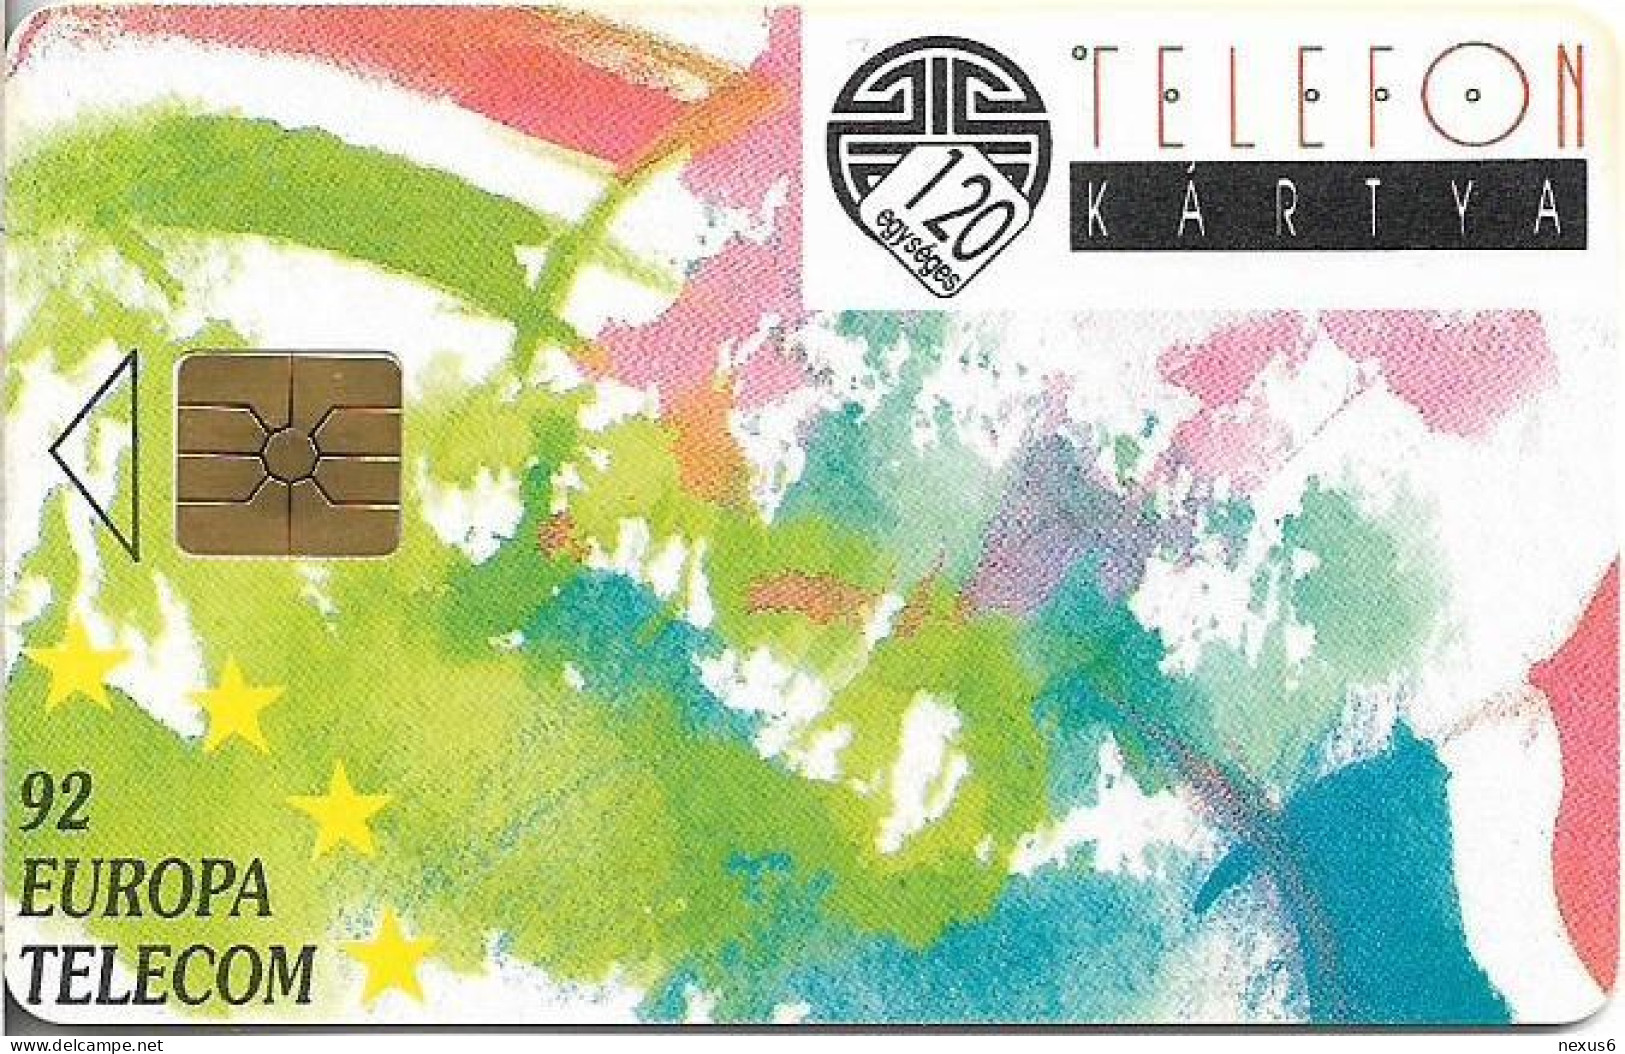 Hungary - Matáv - Europa Telecom 92, Gem1B Not Symm. Red, With Transp. Moreno, 10.1992, 120U, 10.000ex, Used - Ungarn